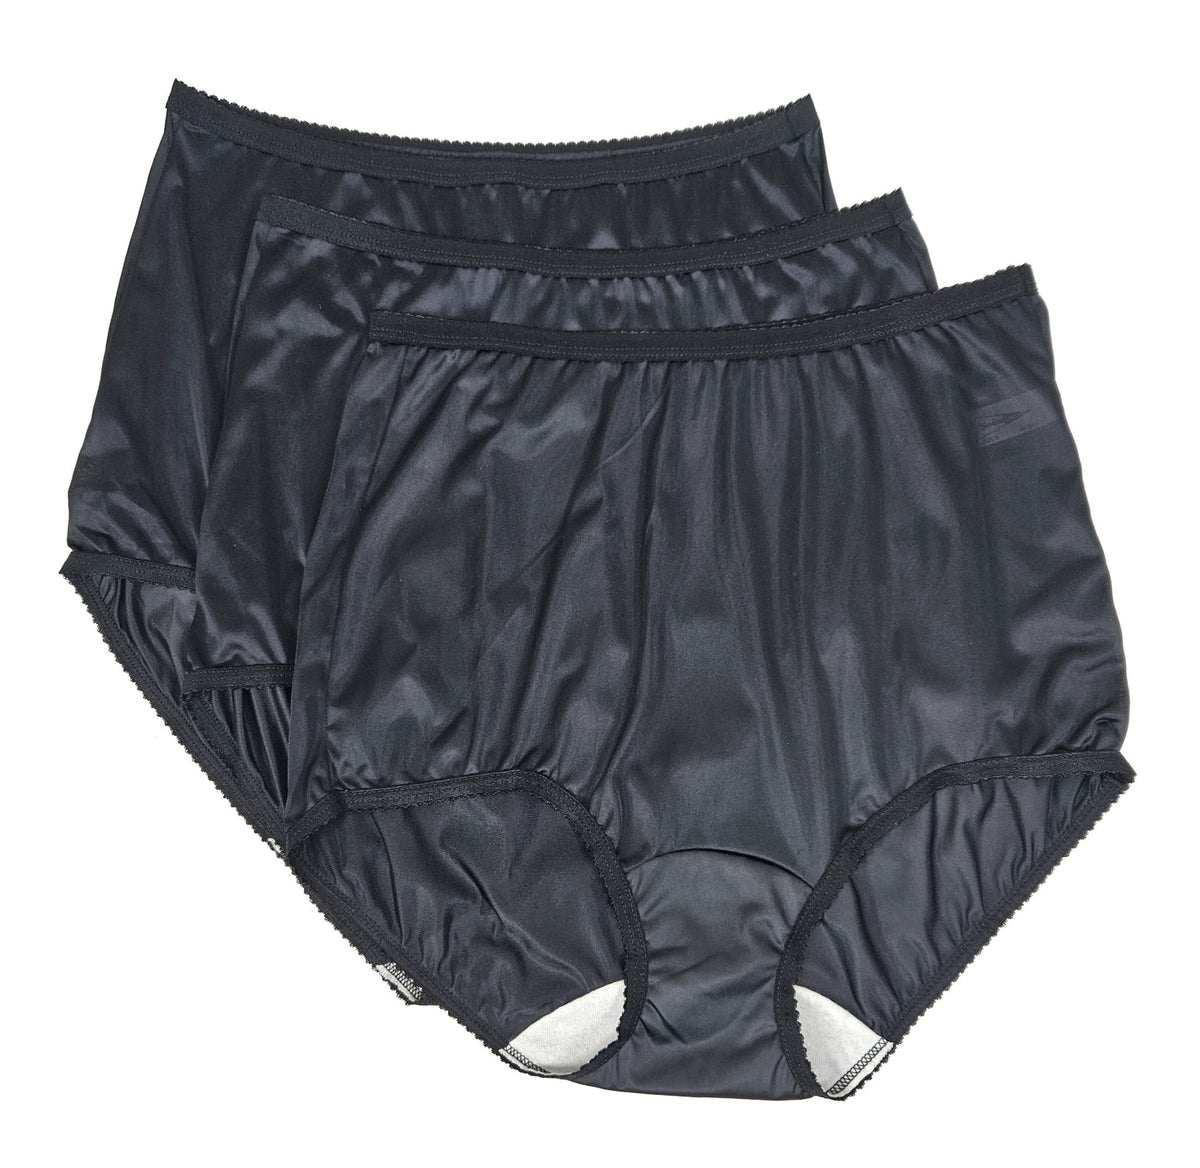 Shadowline Panties Women's Full Brief Silky Nylon Underwear 3-Pack